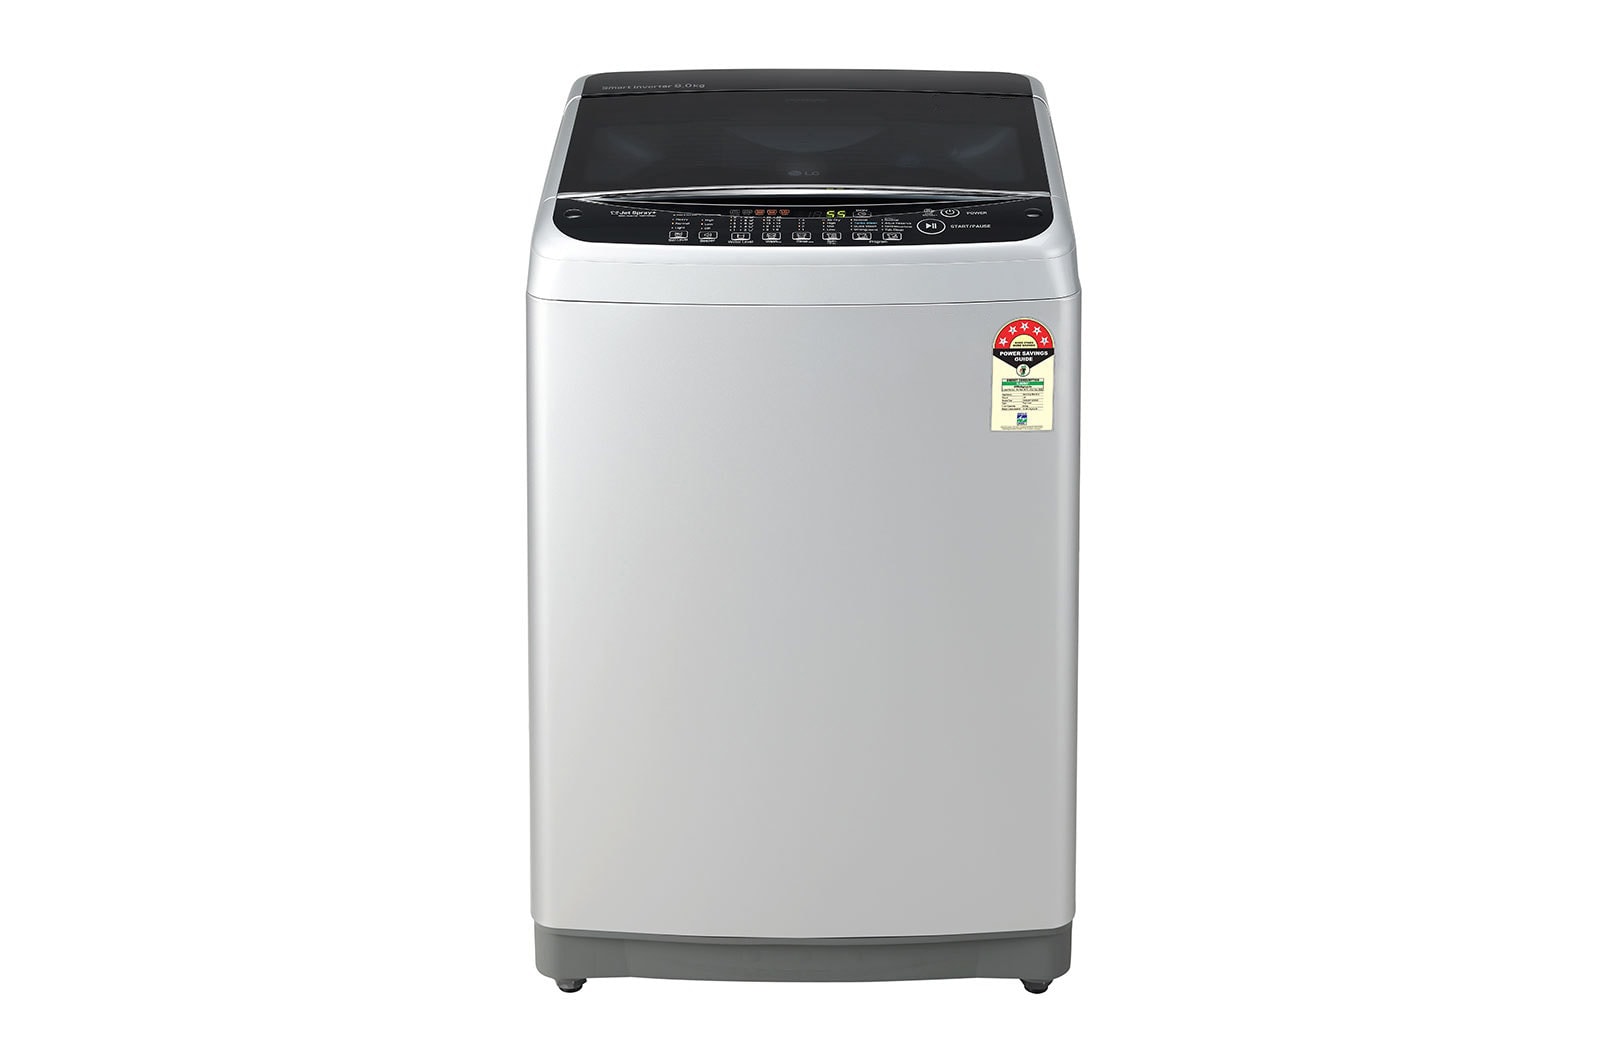 LG 8Kg Top Load Washing Machine, Smart Inverter Motor, Middle Free Silver, T80SJSF1Z